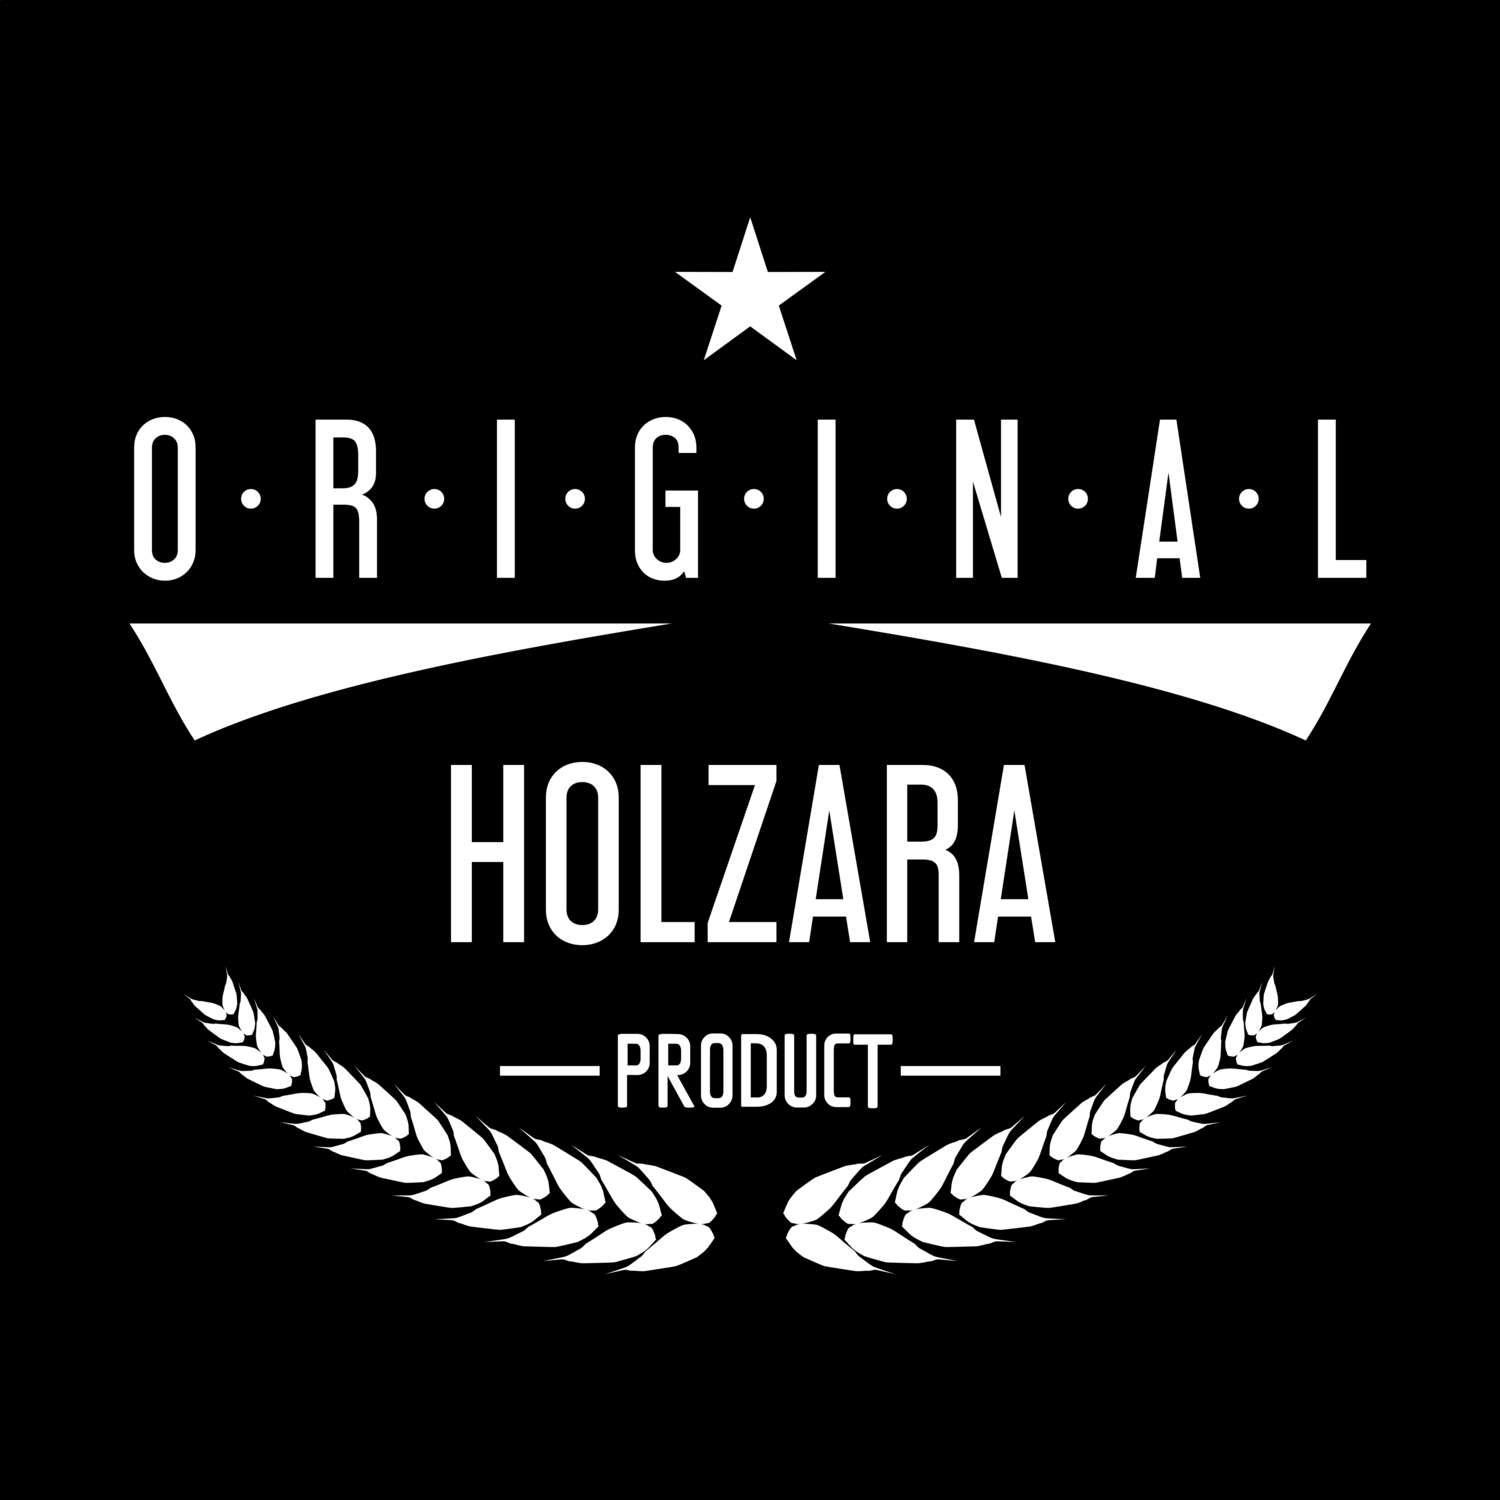 Holzara T-Shirt »Original Product«